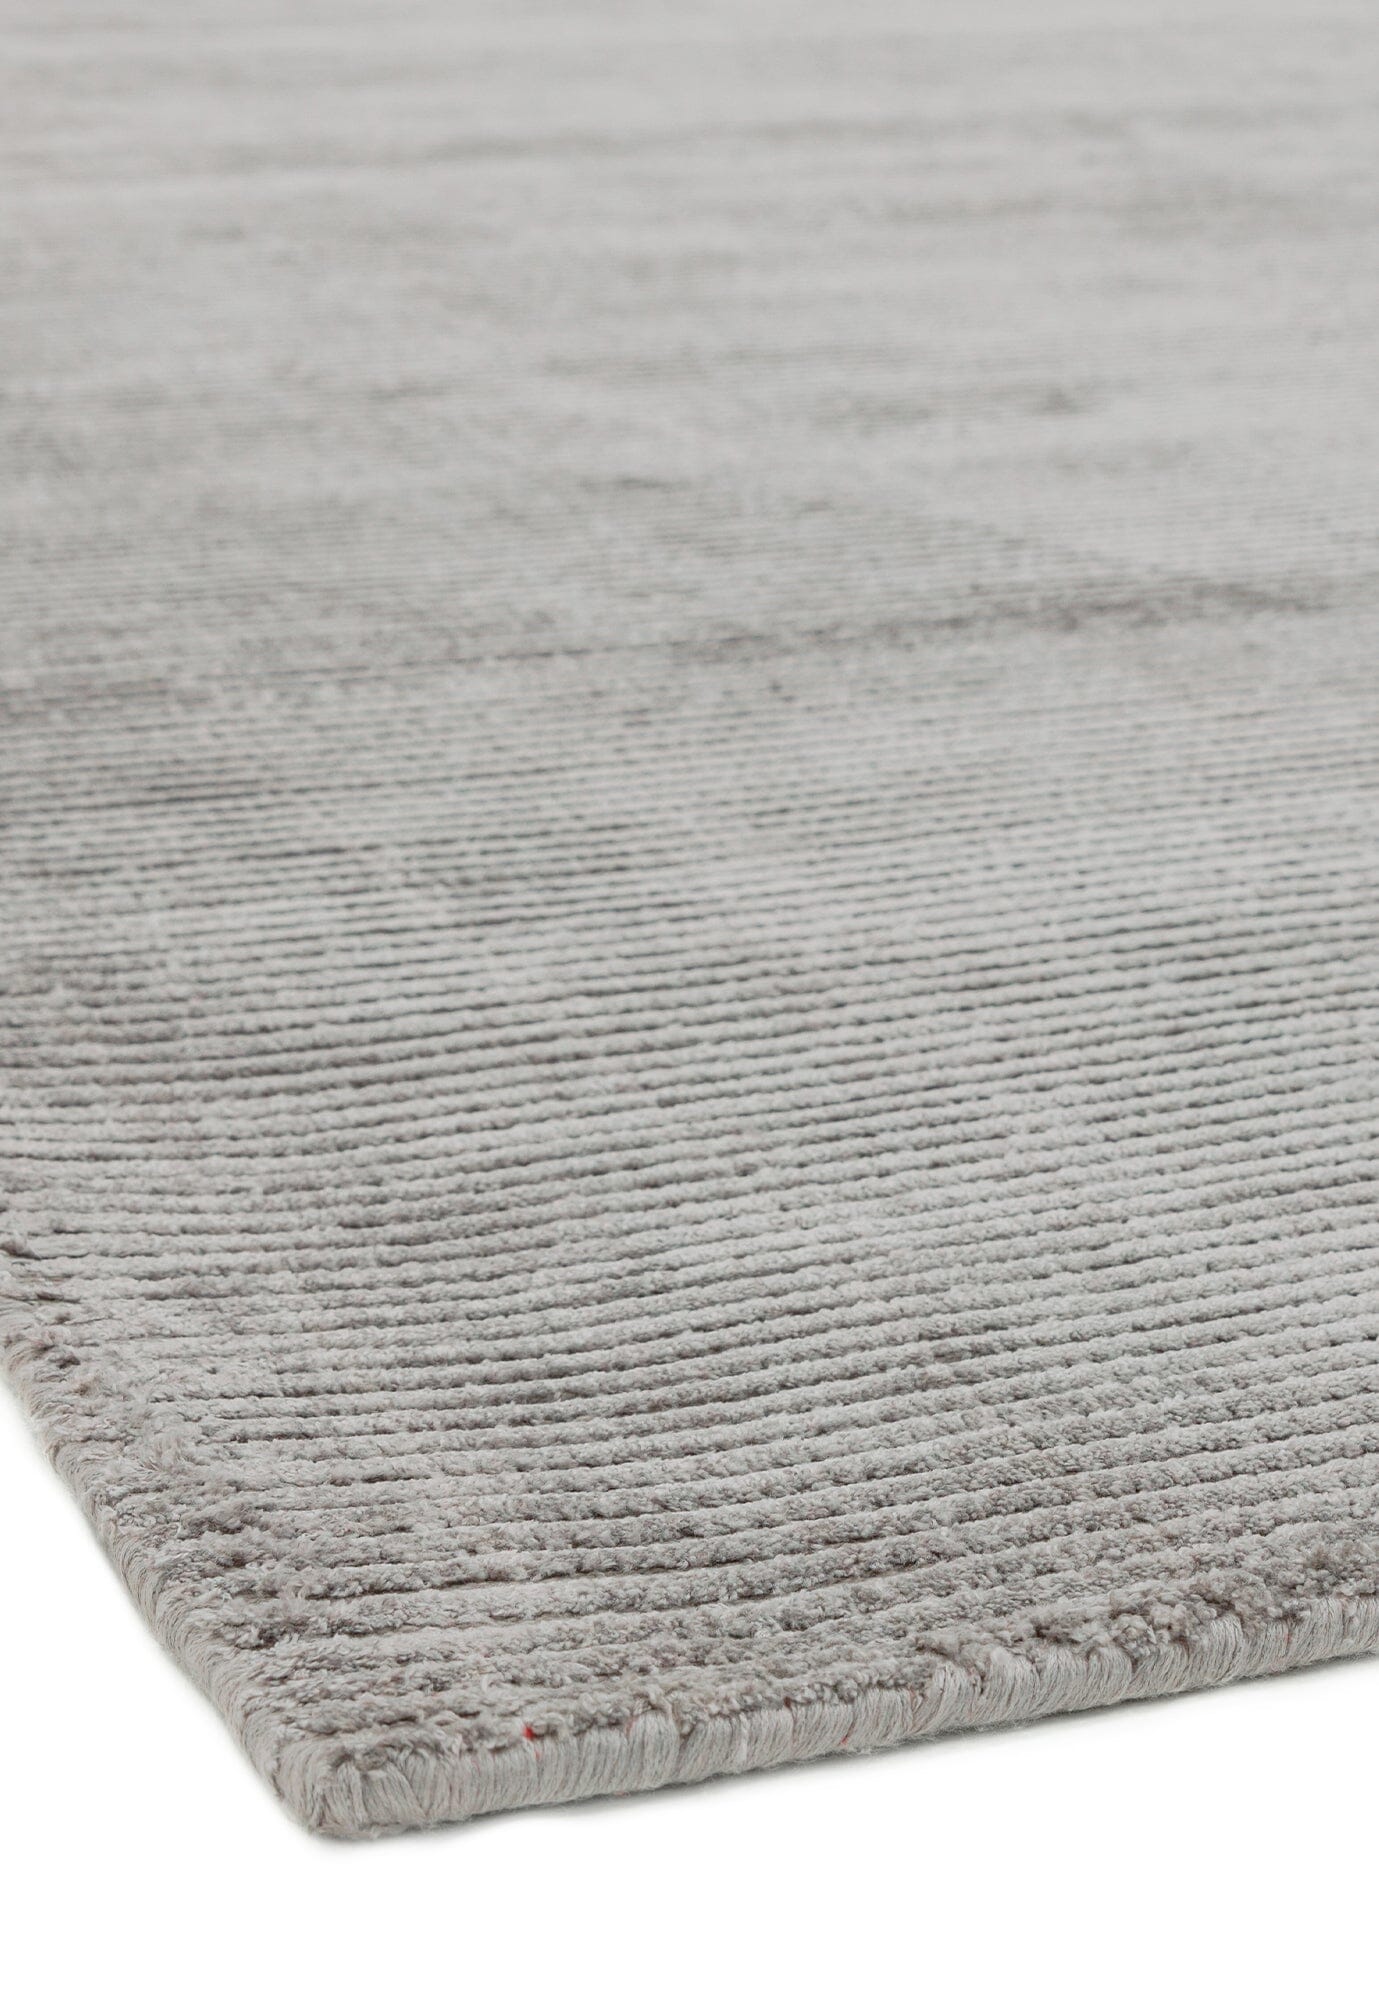 Asiatic Carpets Reko Hand Woven Rug Silver - 160 x 230cm